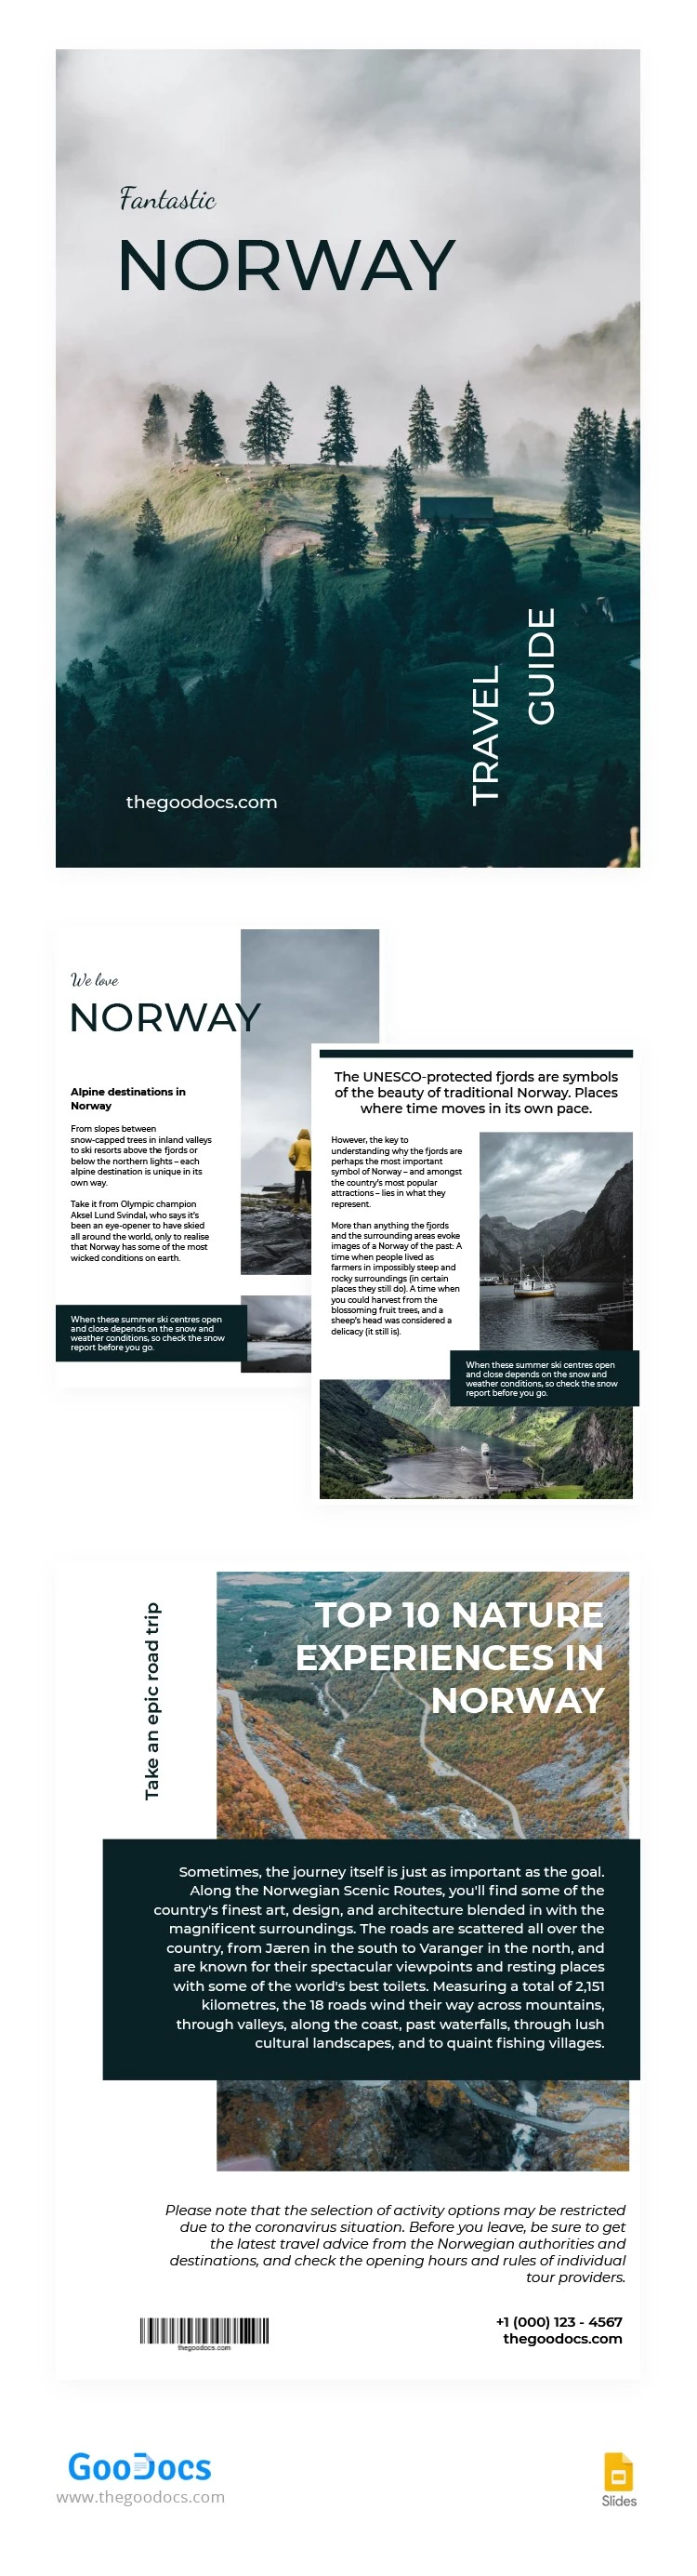 Libro fantástico de Noruega - free Google Docs Template - 10062805